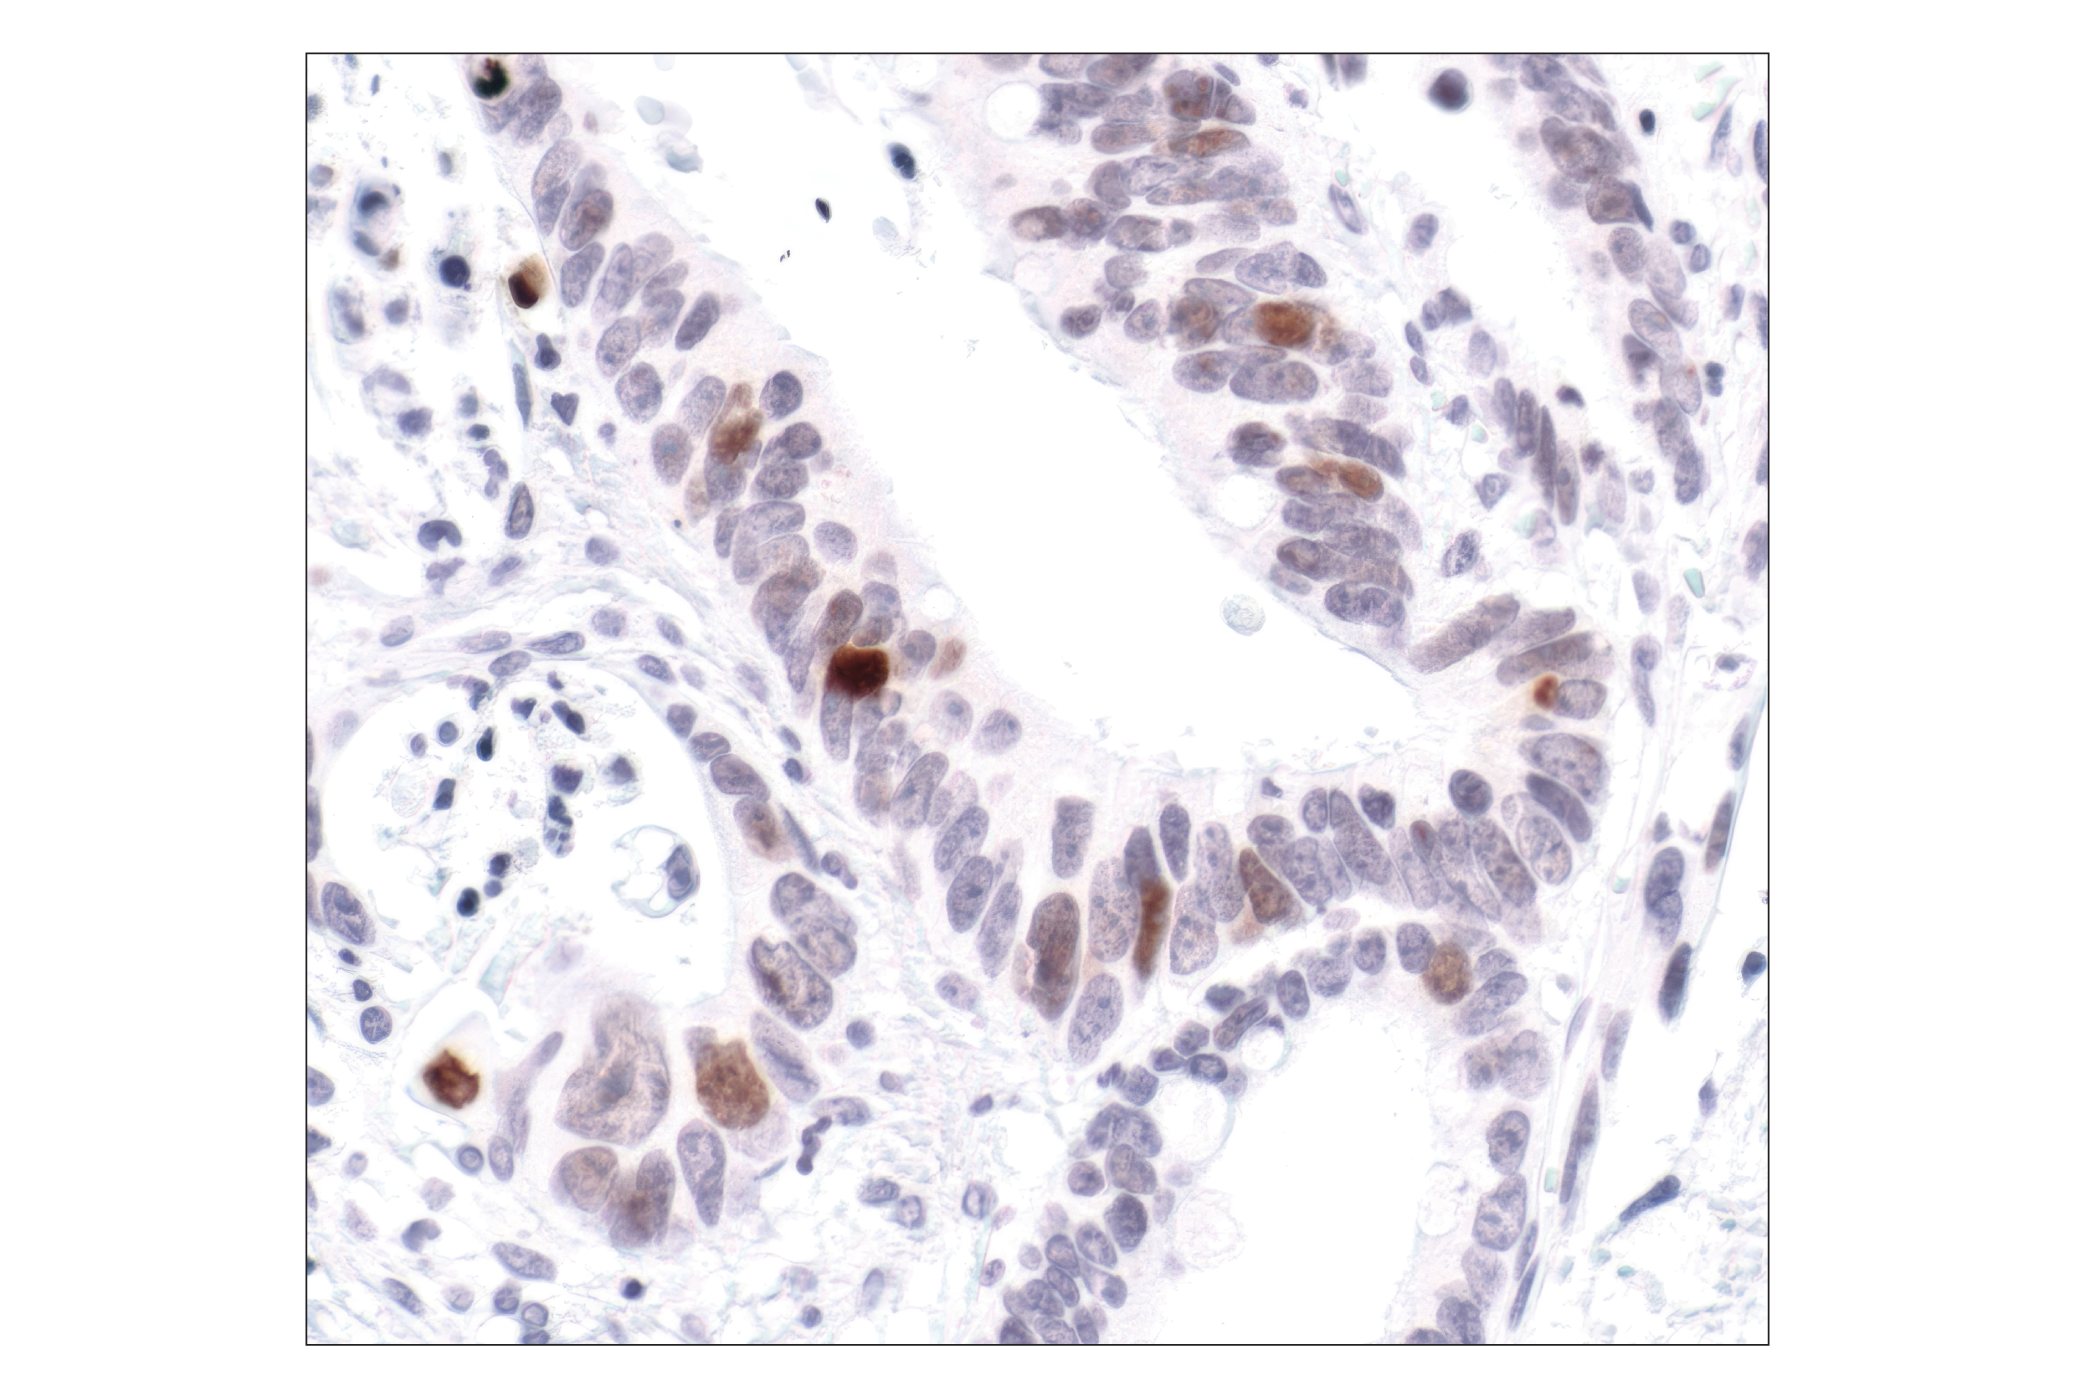  Image 10: PhosphoPlus® Histone H2A.X (Ser139) Antibody Duet